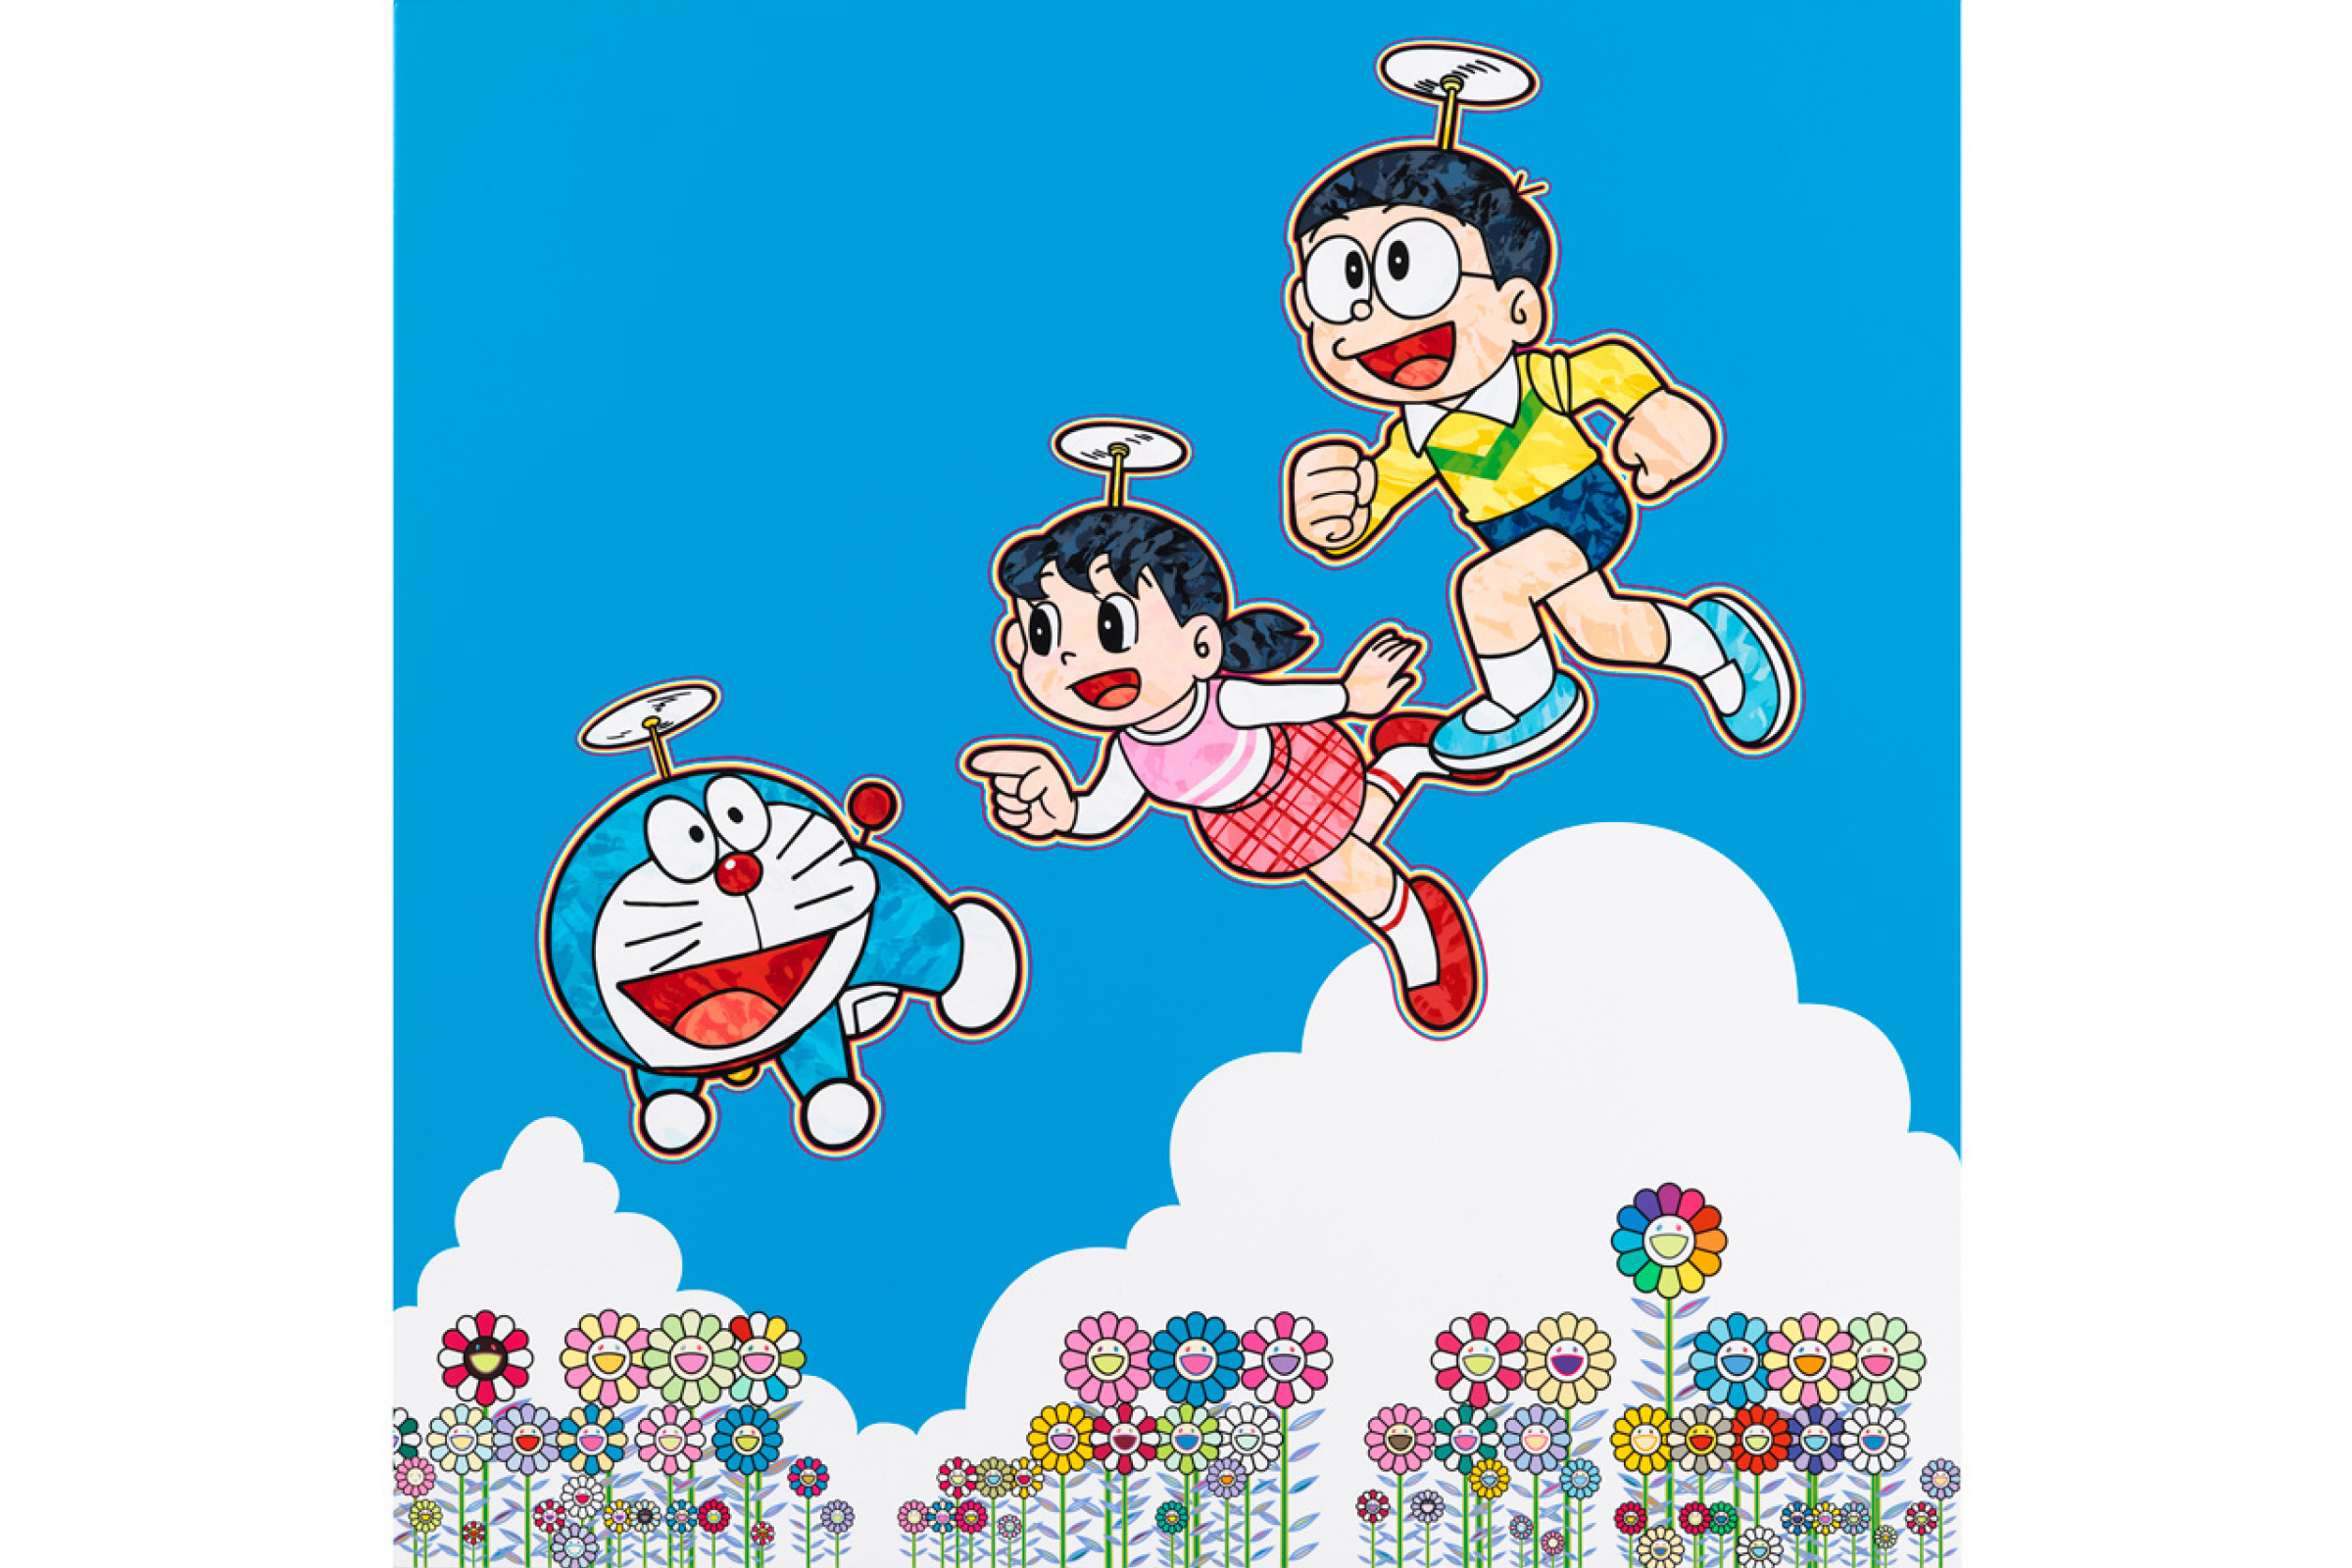 Takashi Murakami, 'Superflat Doraemon' at Perrotin, Tokyo, Japan